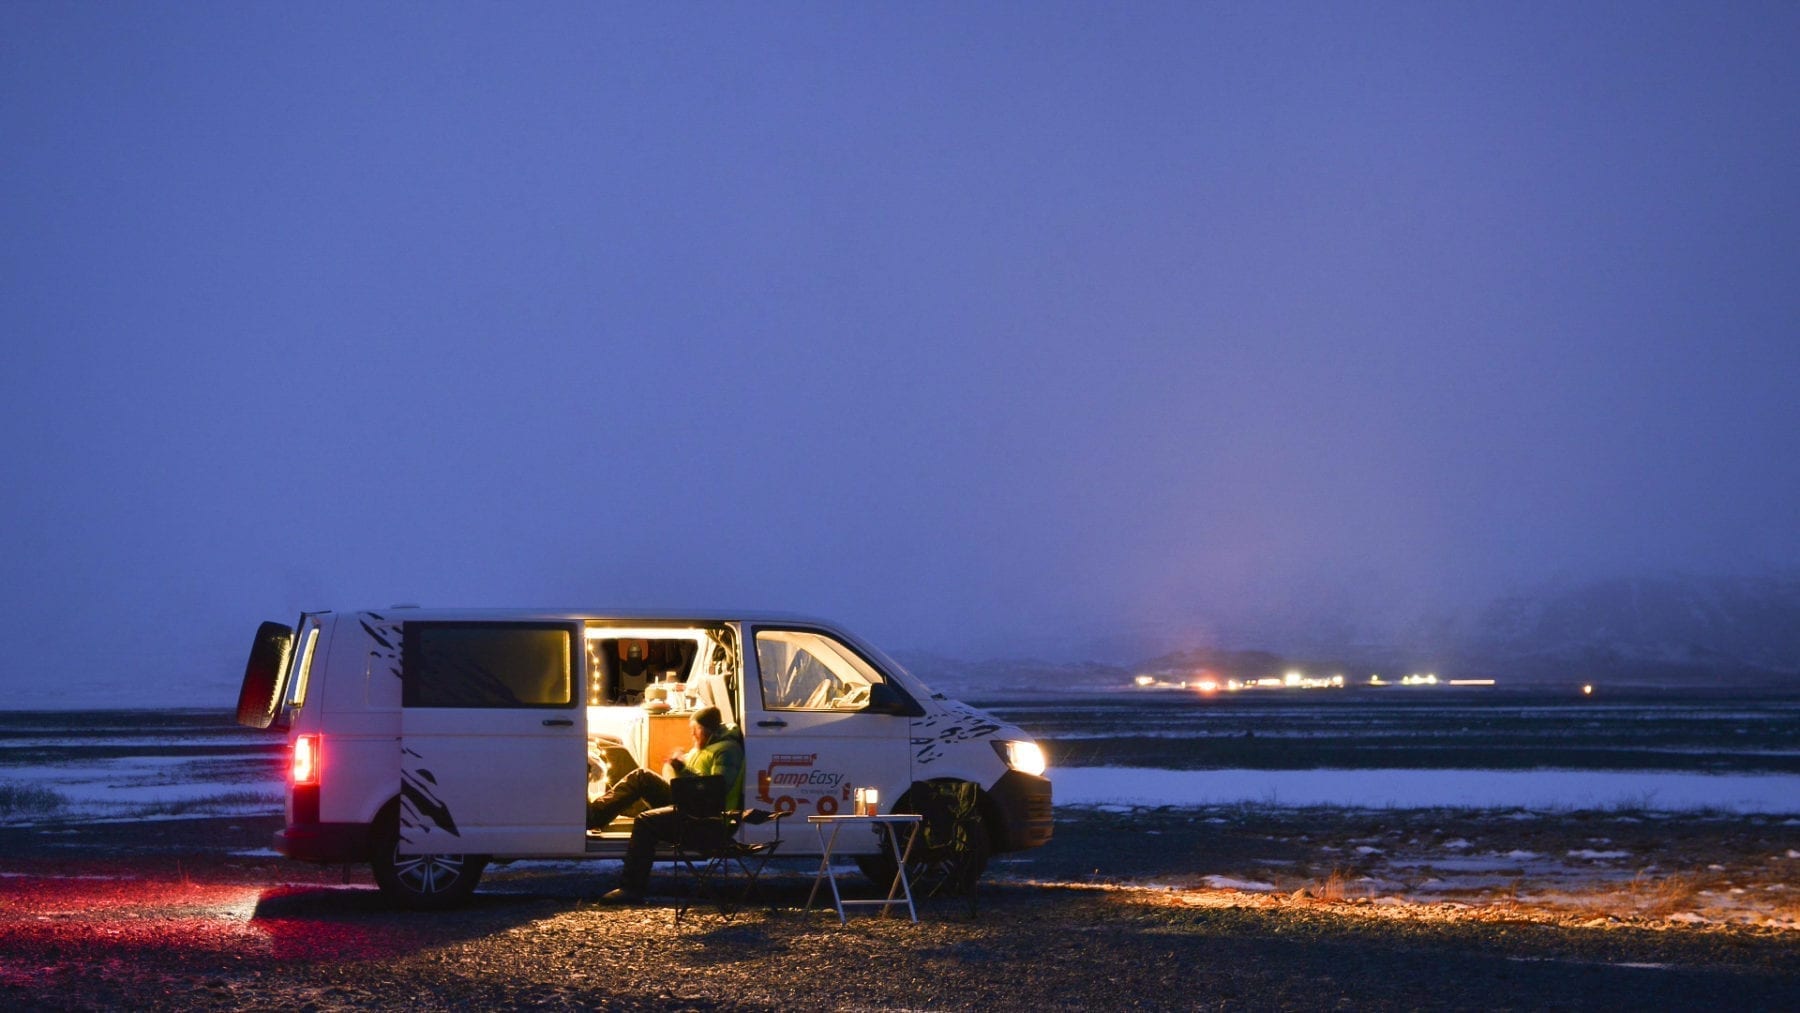 A man sitting in a camper van in the evening